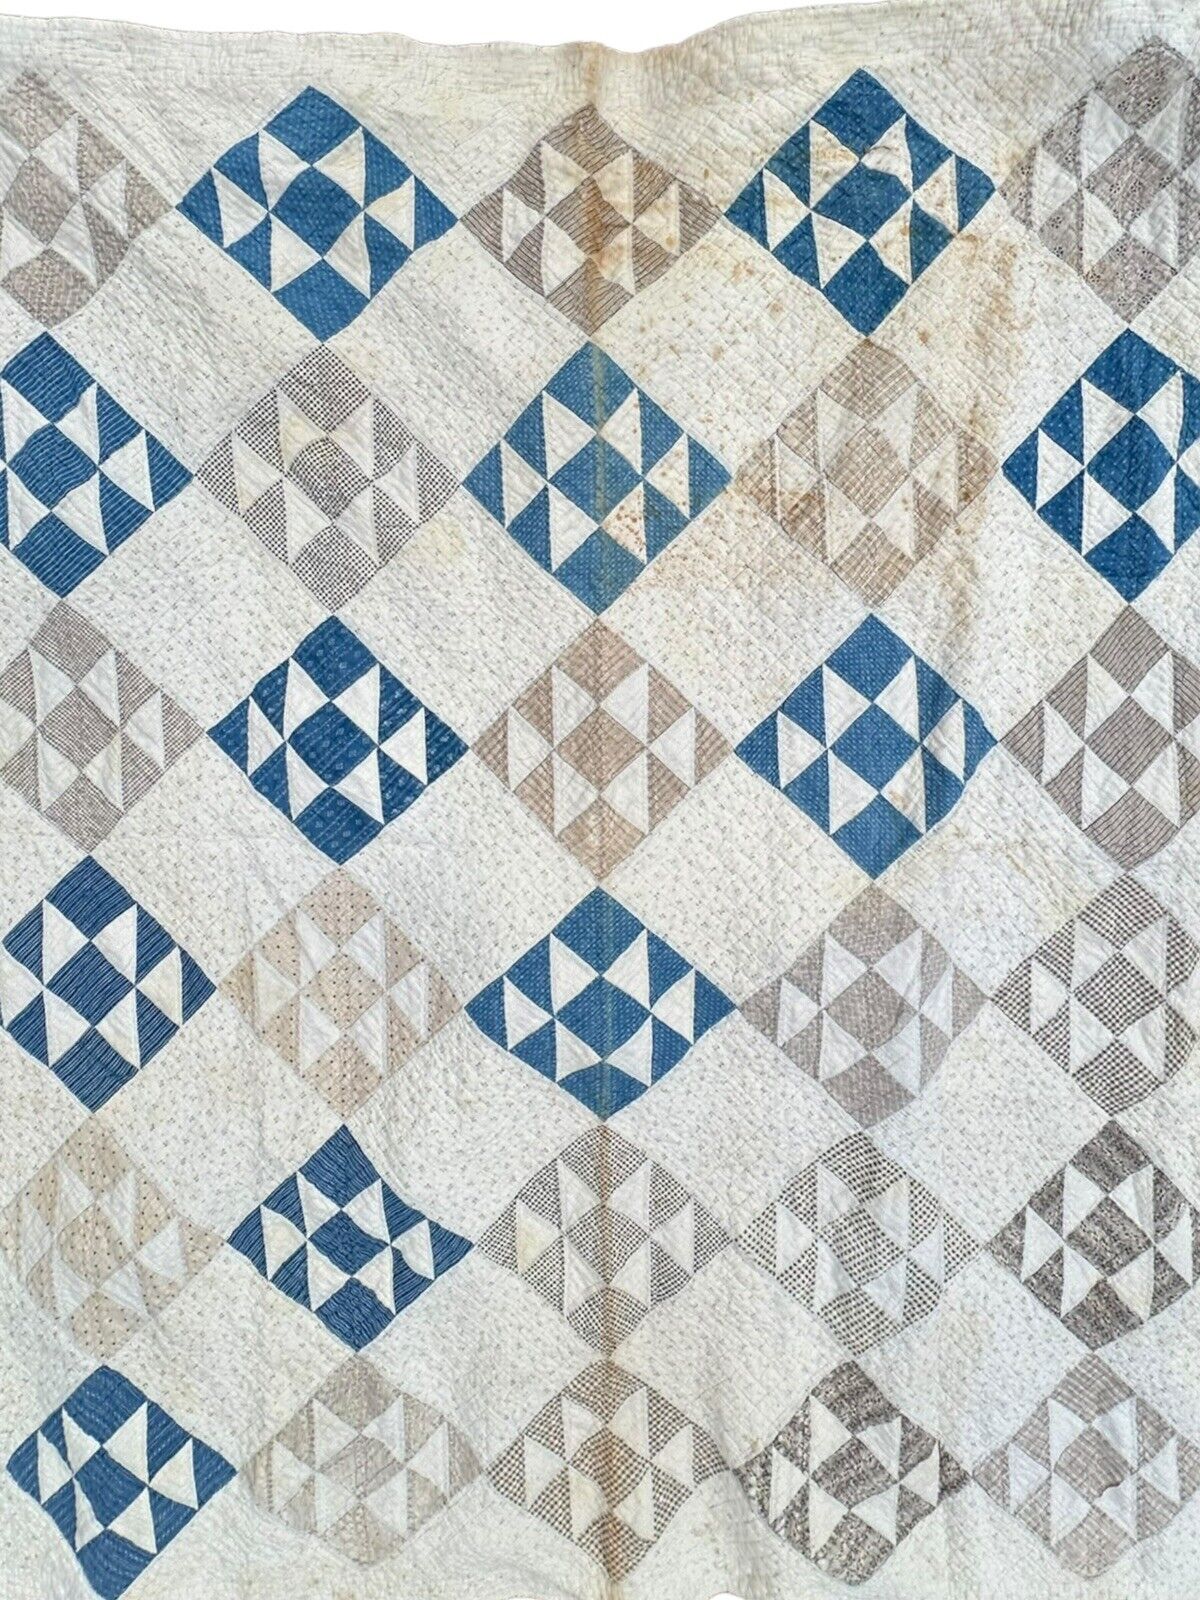 Vintage HANDMADE Patchwork Quilt, Very Old Blue, White, Beige. 60x71. 1920’s??